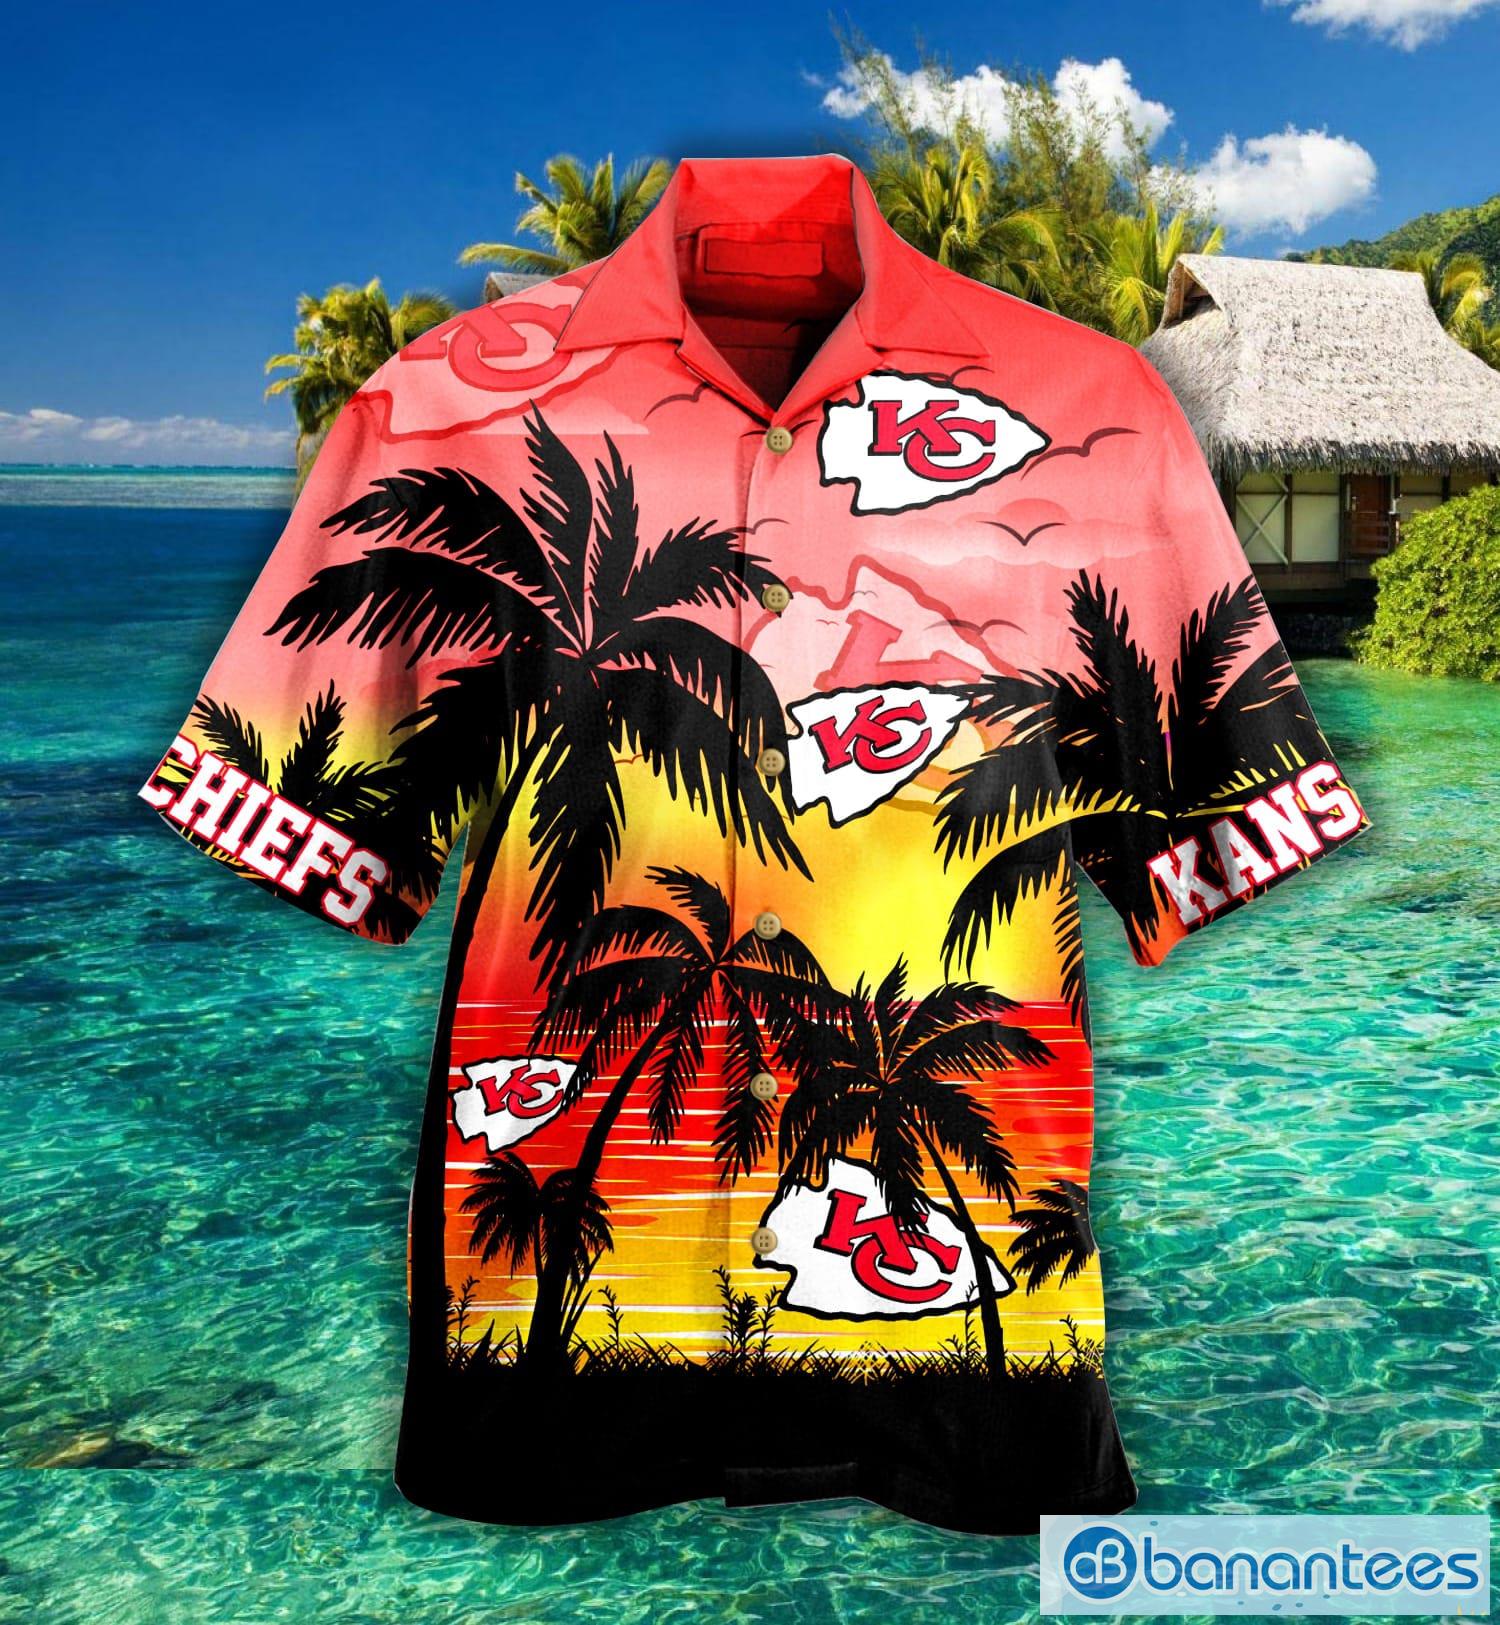 Kanas City Chiefs Nfl Palm Sunset Hawaiian Shirt For Fans Product Photo 1